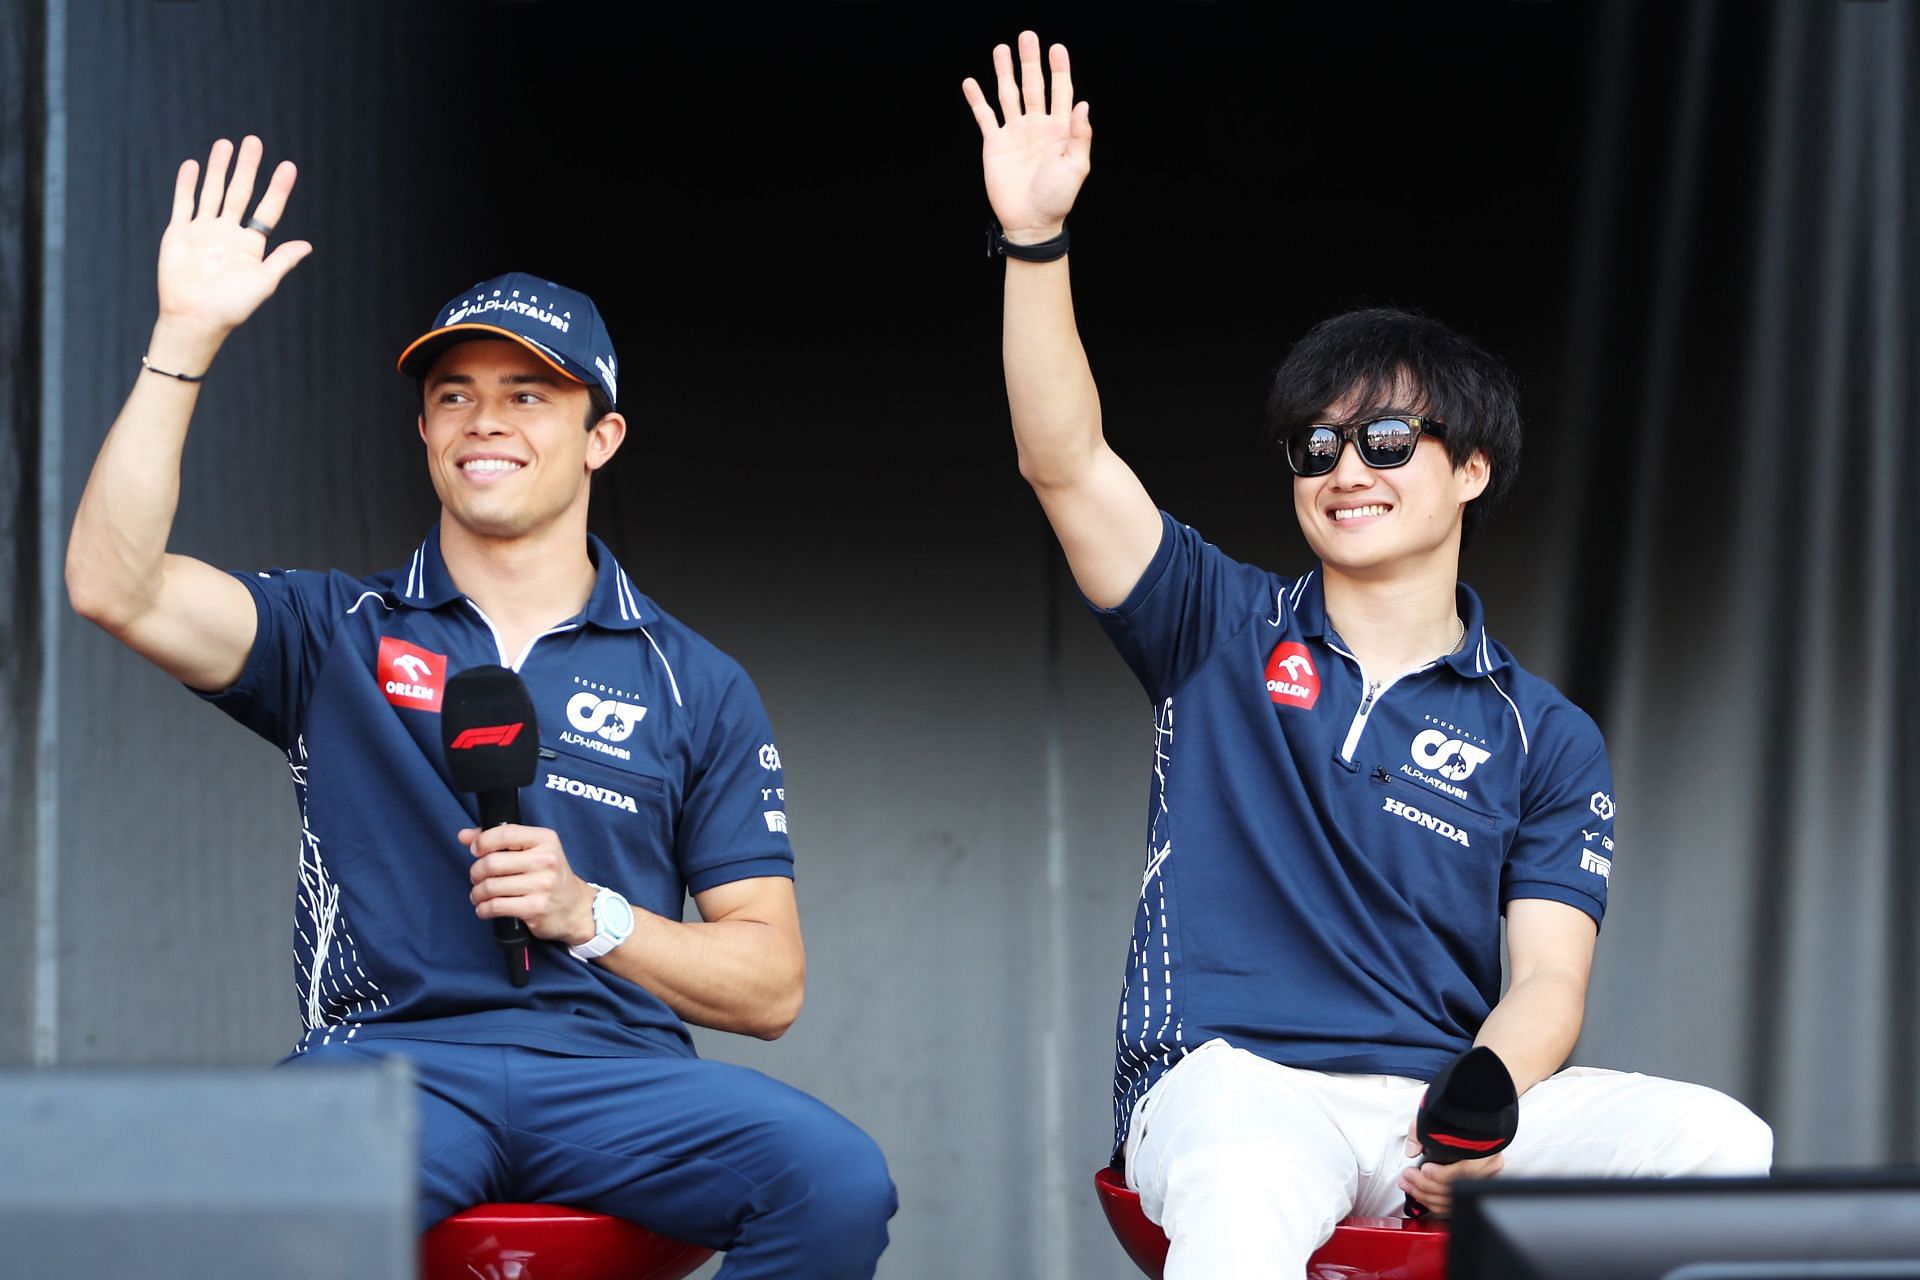 “He’s like a Niki Lauda”: Nyck de Vries compared to 3x F1 legend by former teammate Yuki Tsunoda